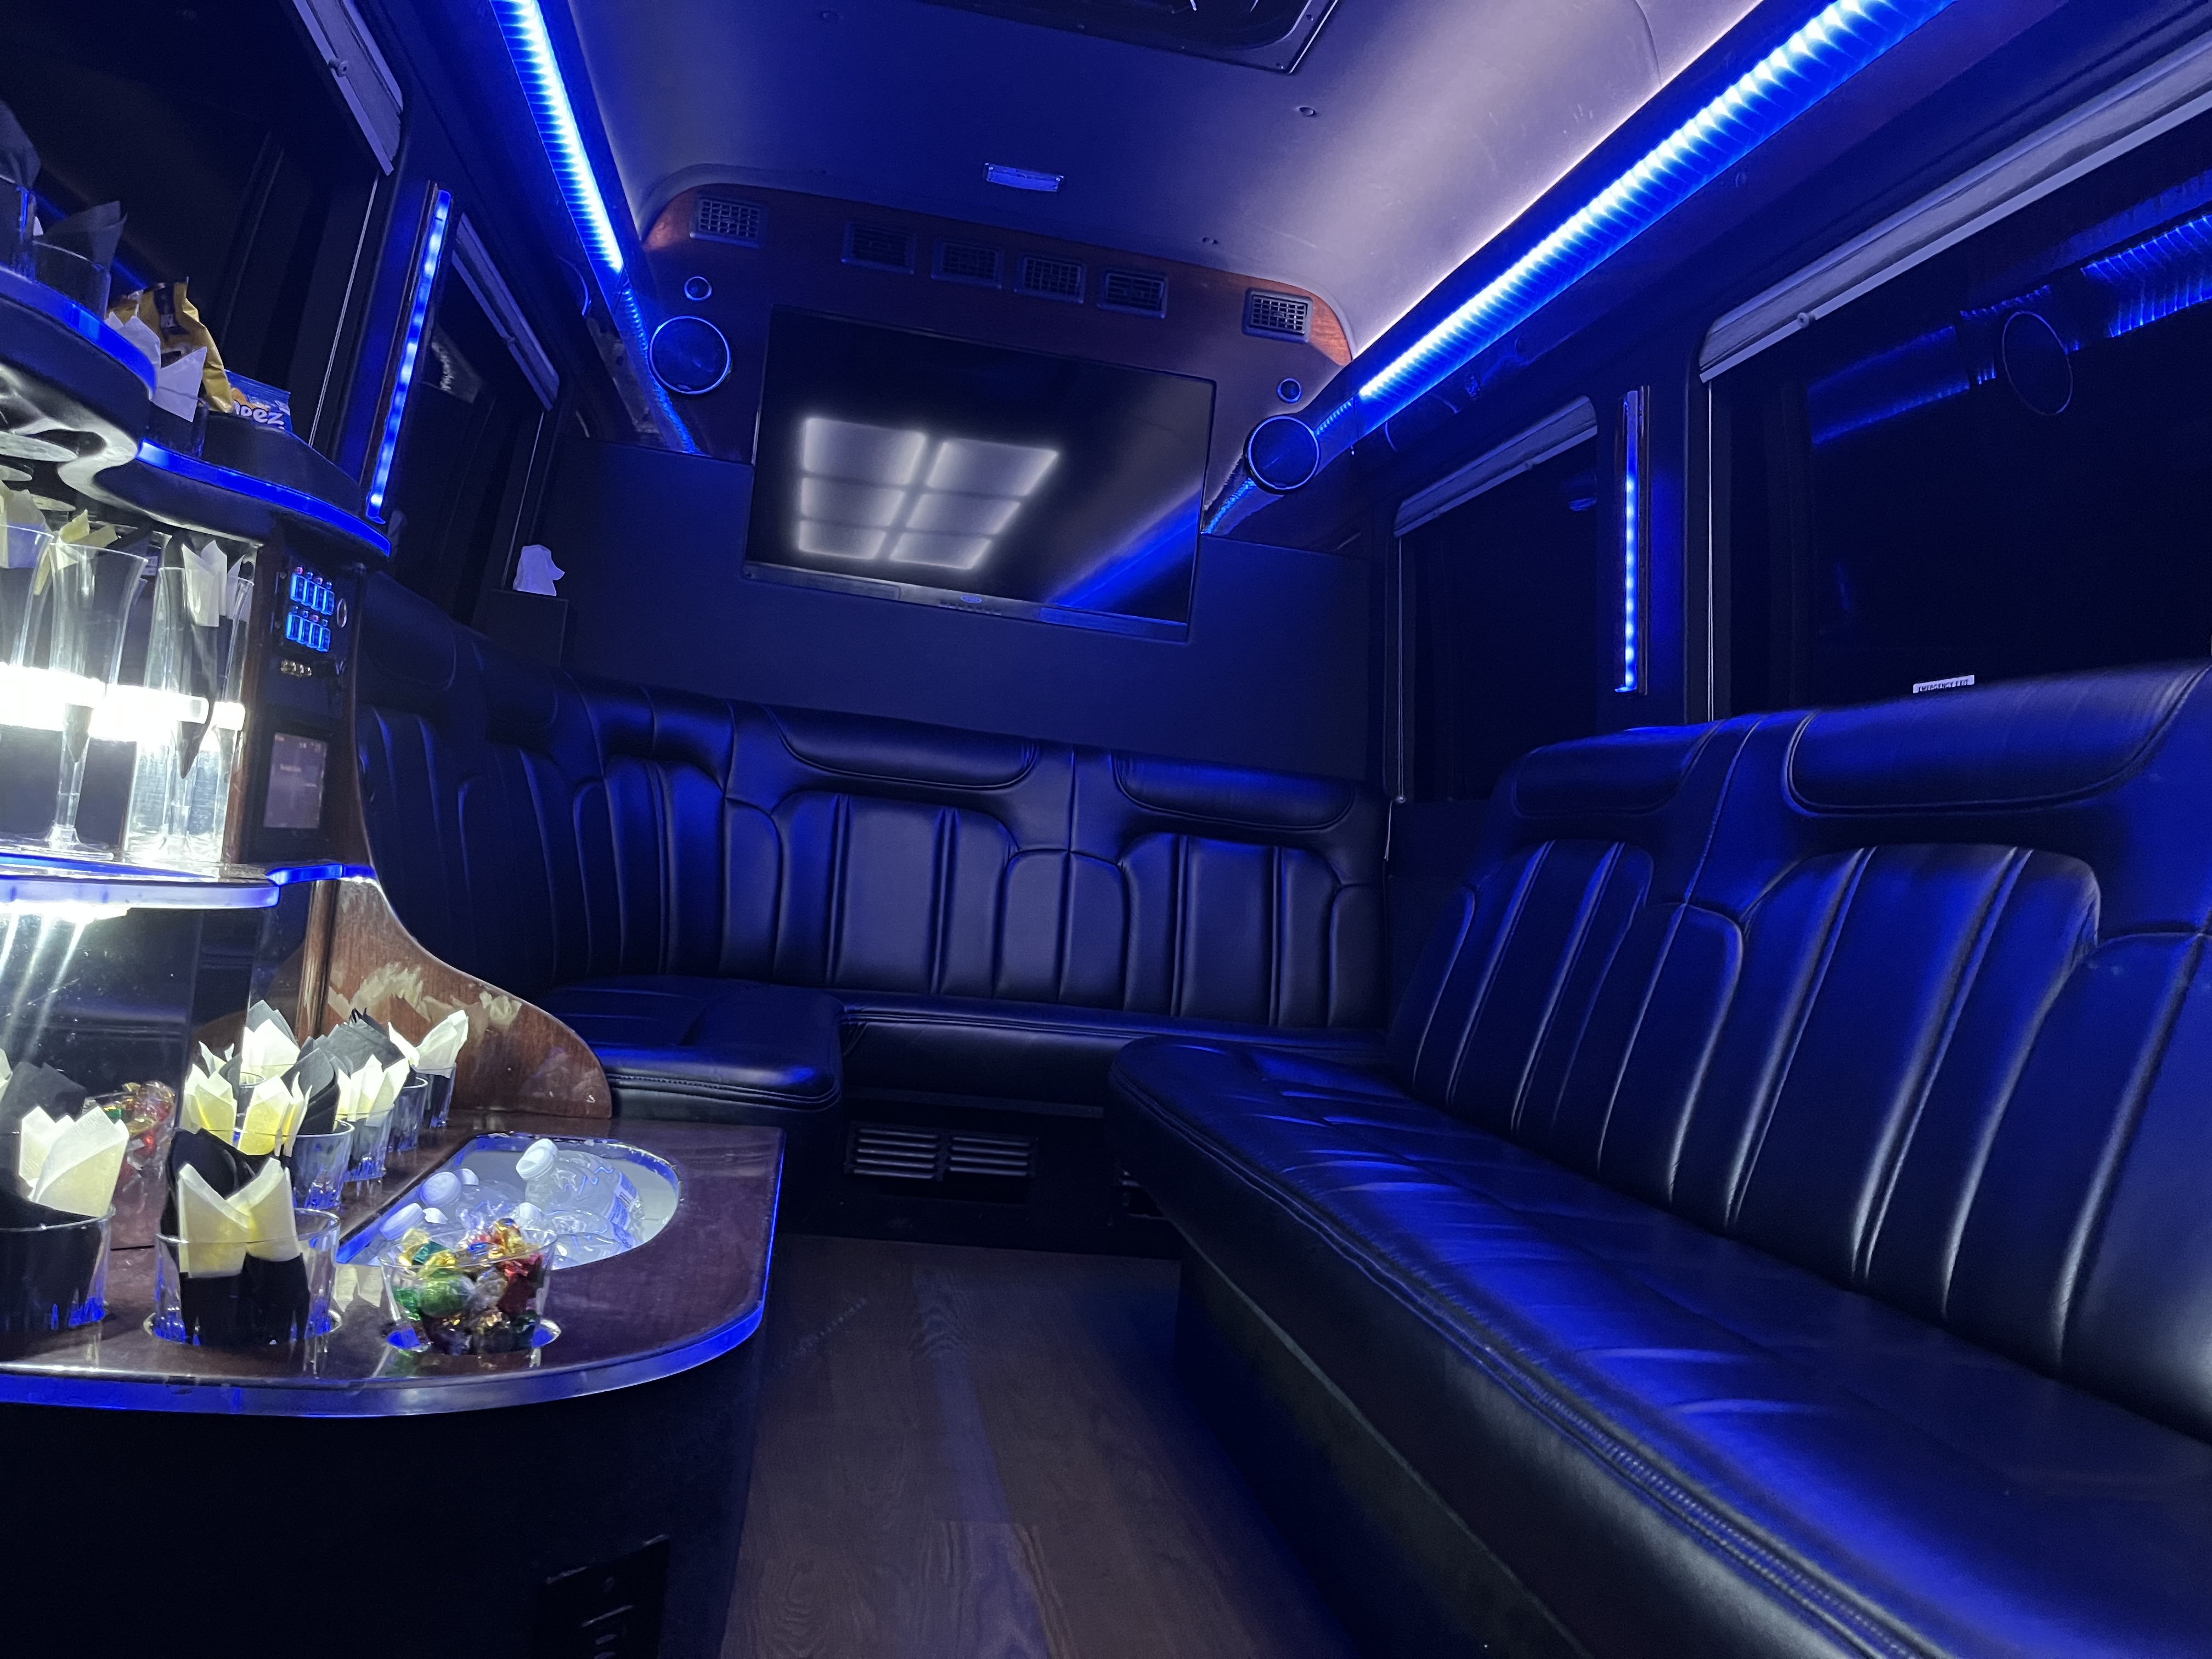 716 Limousine Fleet - gallery image of 14 pax luxury limo buses